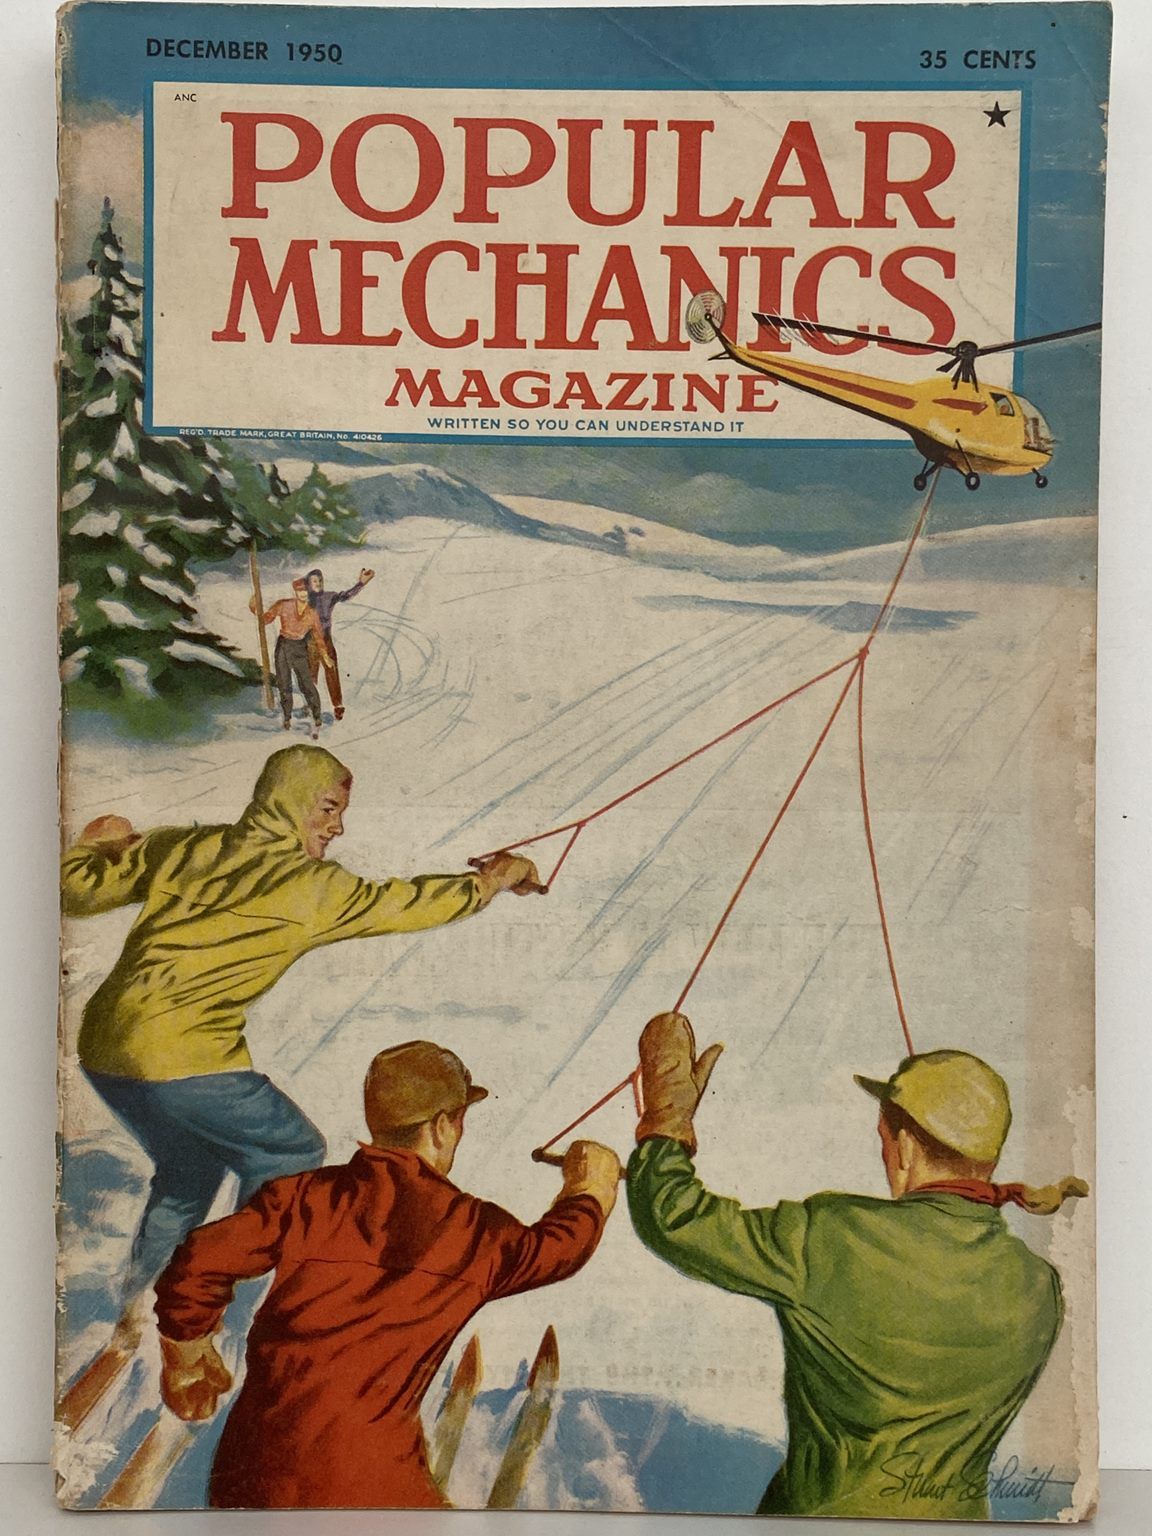 VINTAGE MAGAZINE: Popular Mechanics - Vol. 94, No. 6 - December 1950